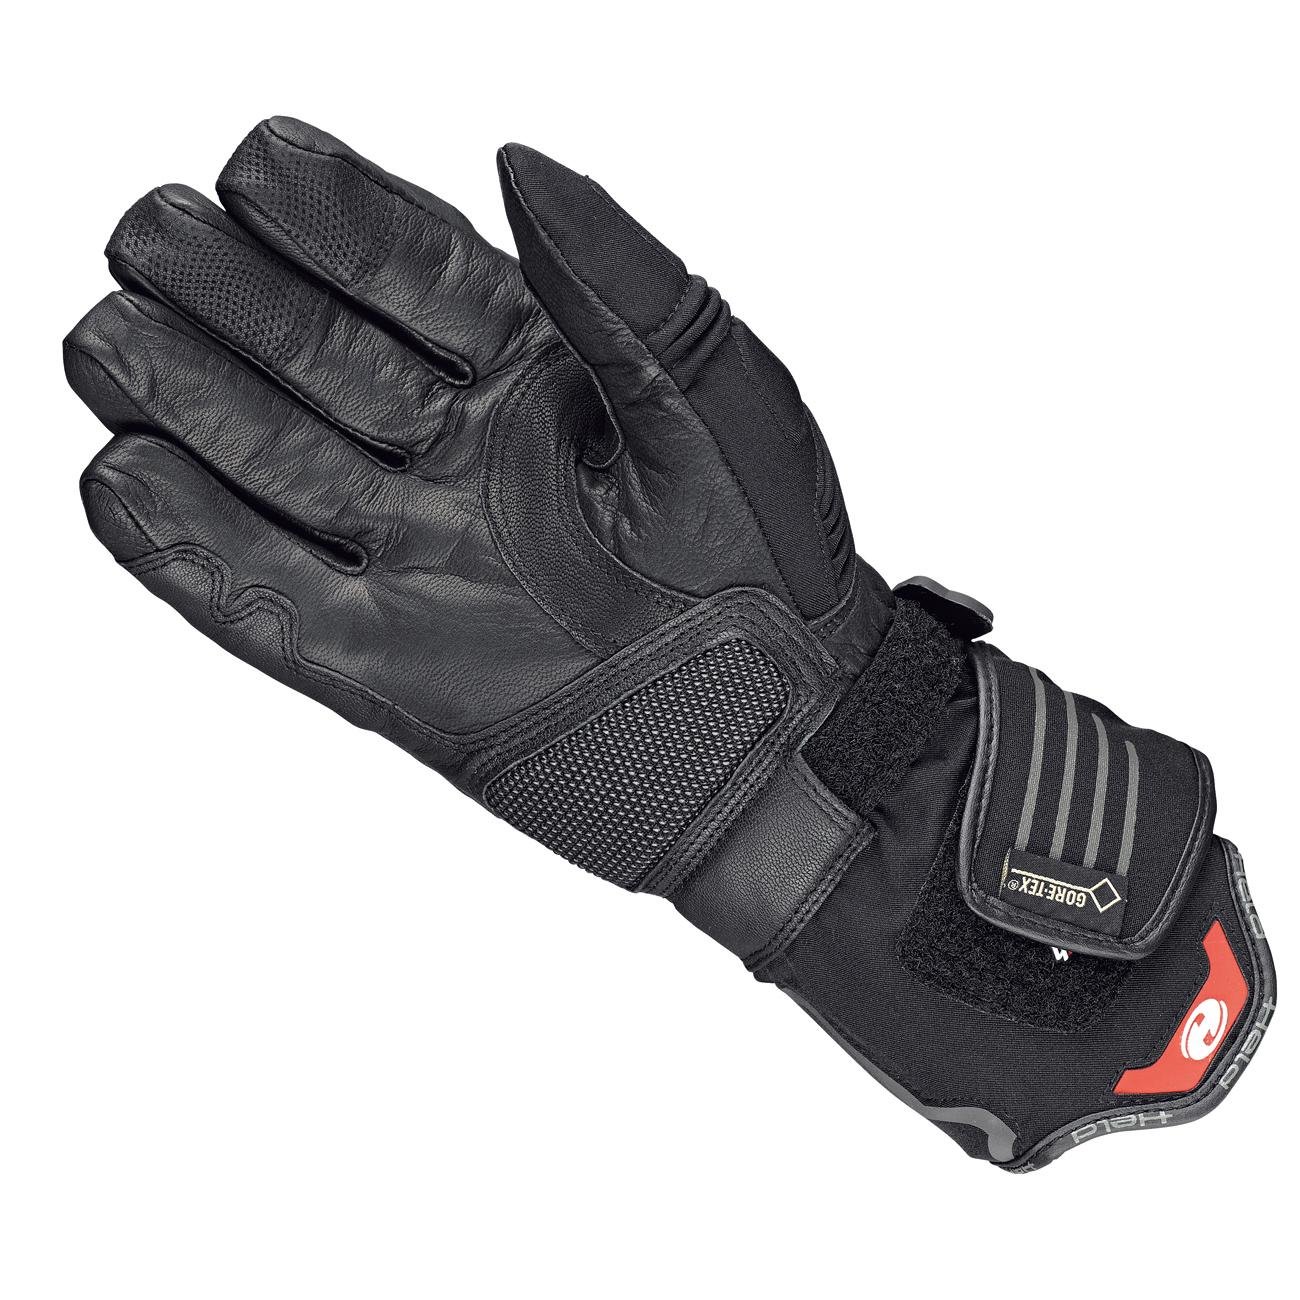 Cold Champ GORE-TEX® glove + Gore Grip technology